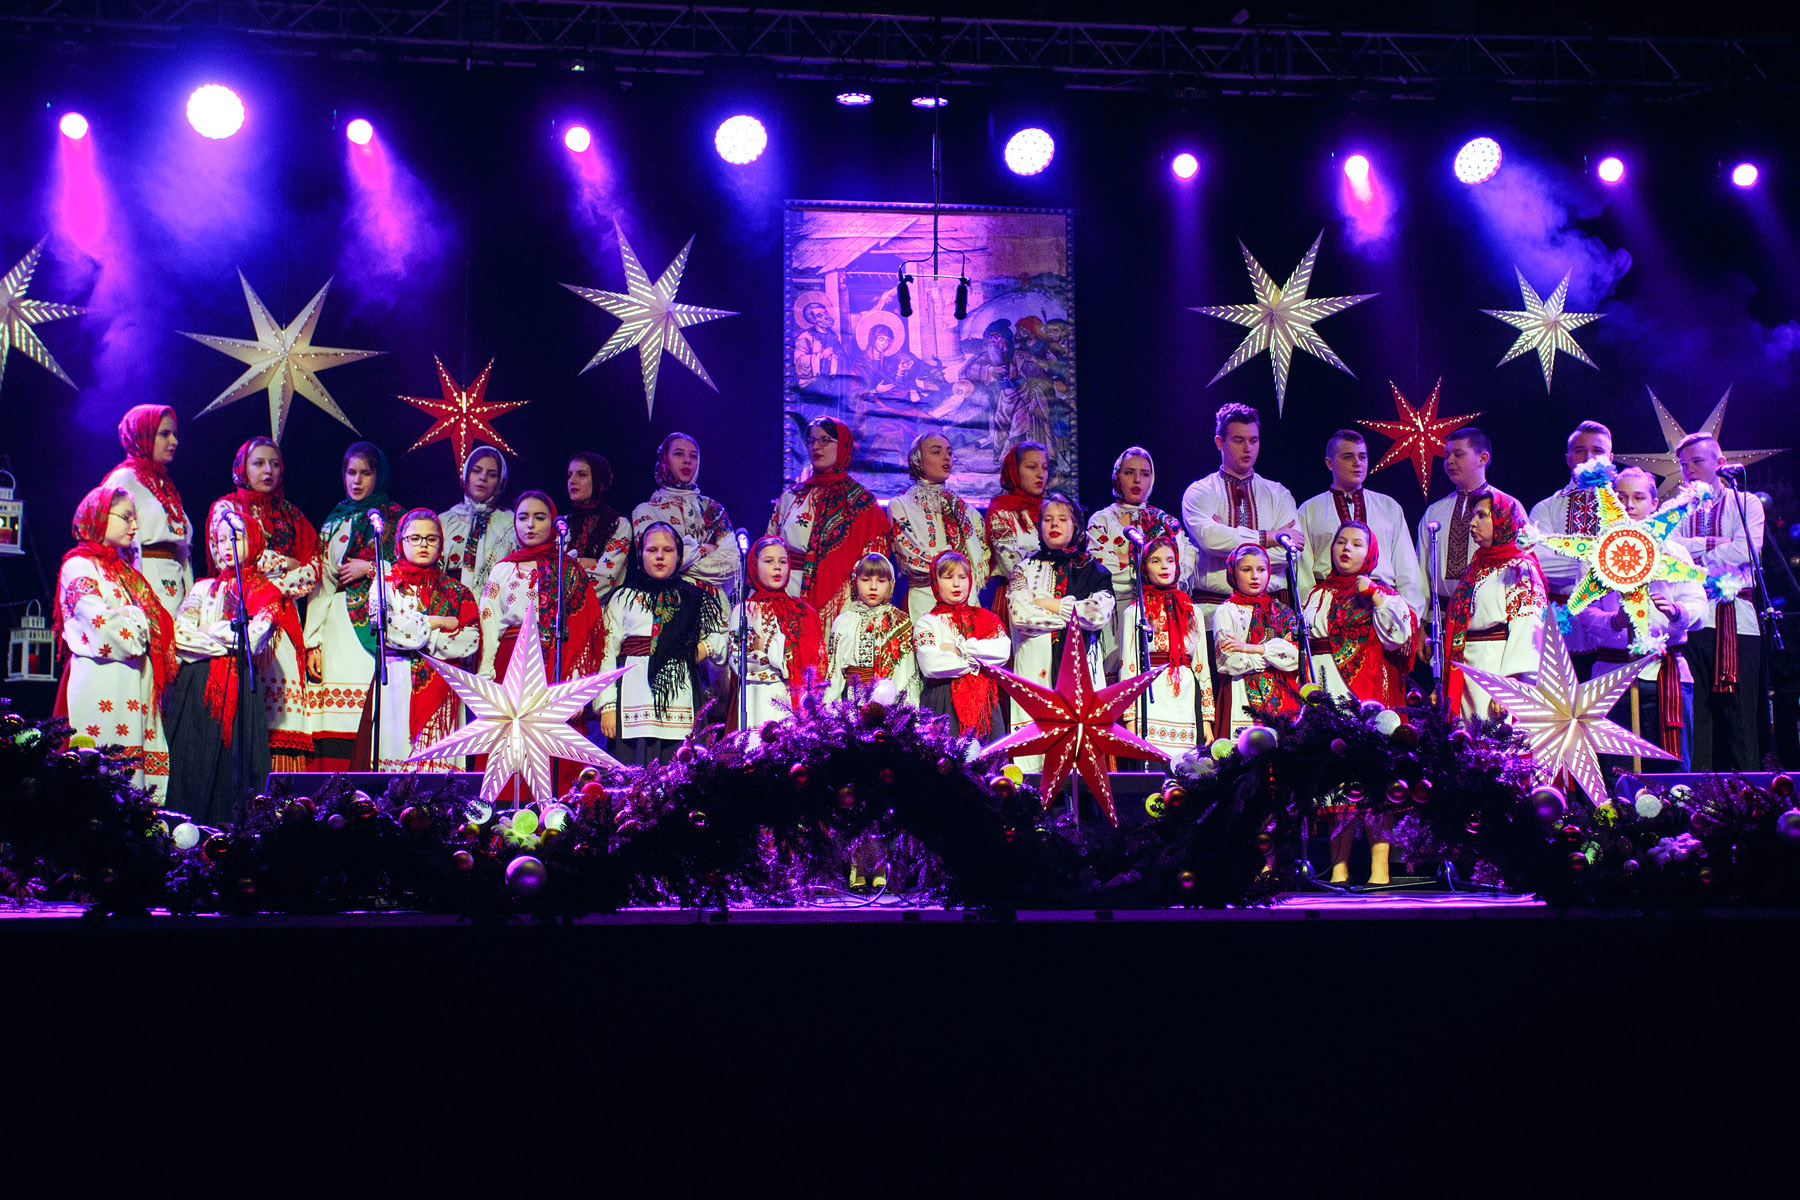 Folk Band "Hiloczka" of the Union of Ukrainians of Podlasie – Czeremcha